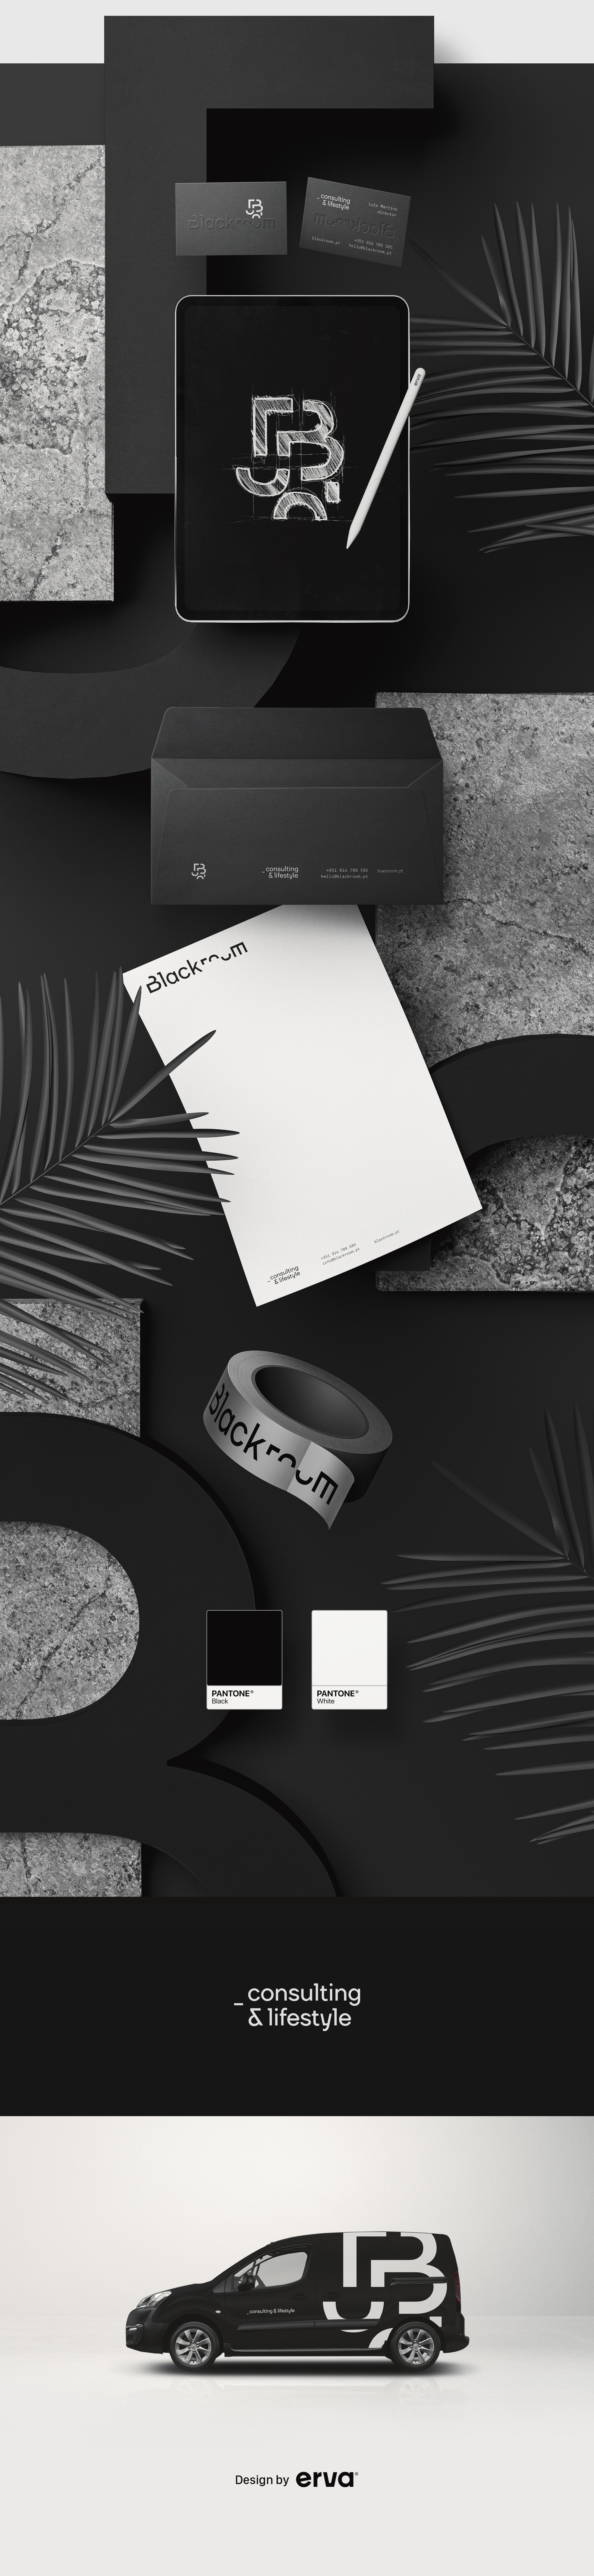 Branding & Graphic Identity for the Black Room brand | Design by erva